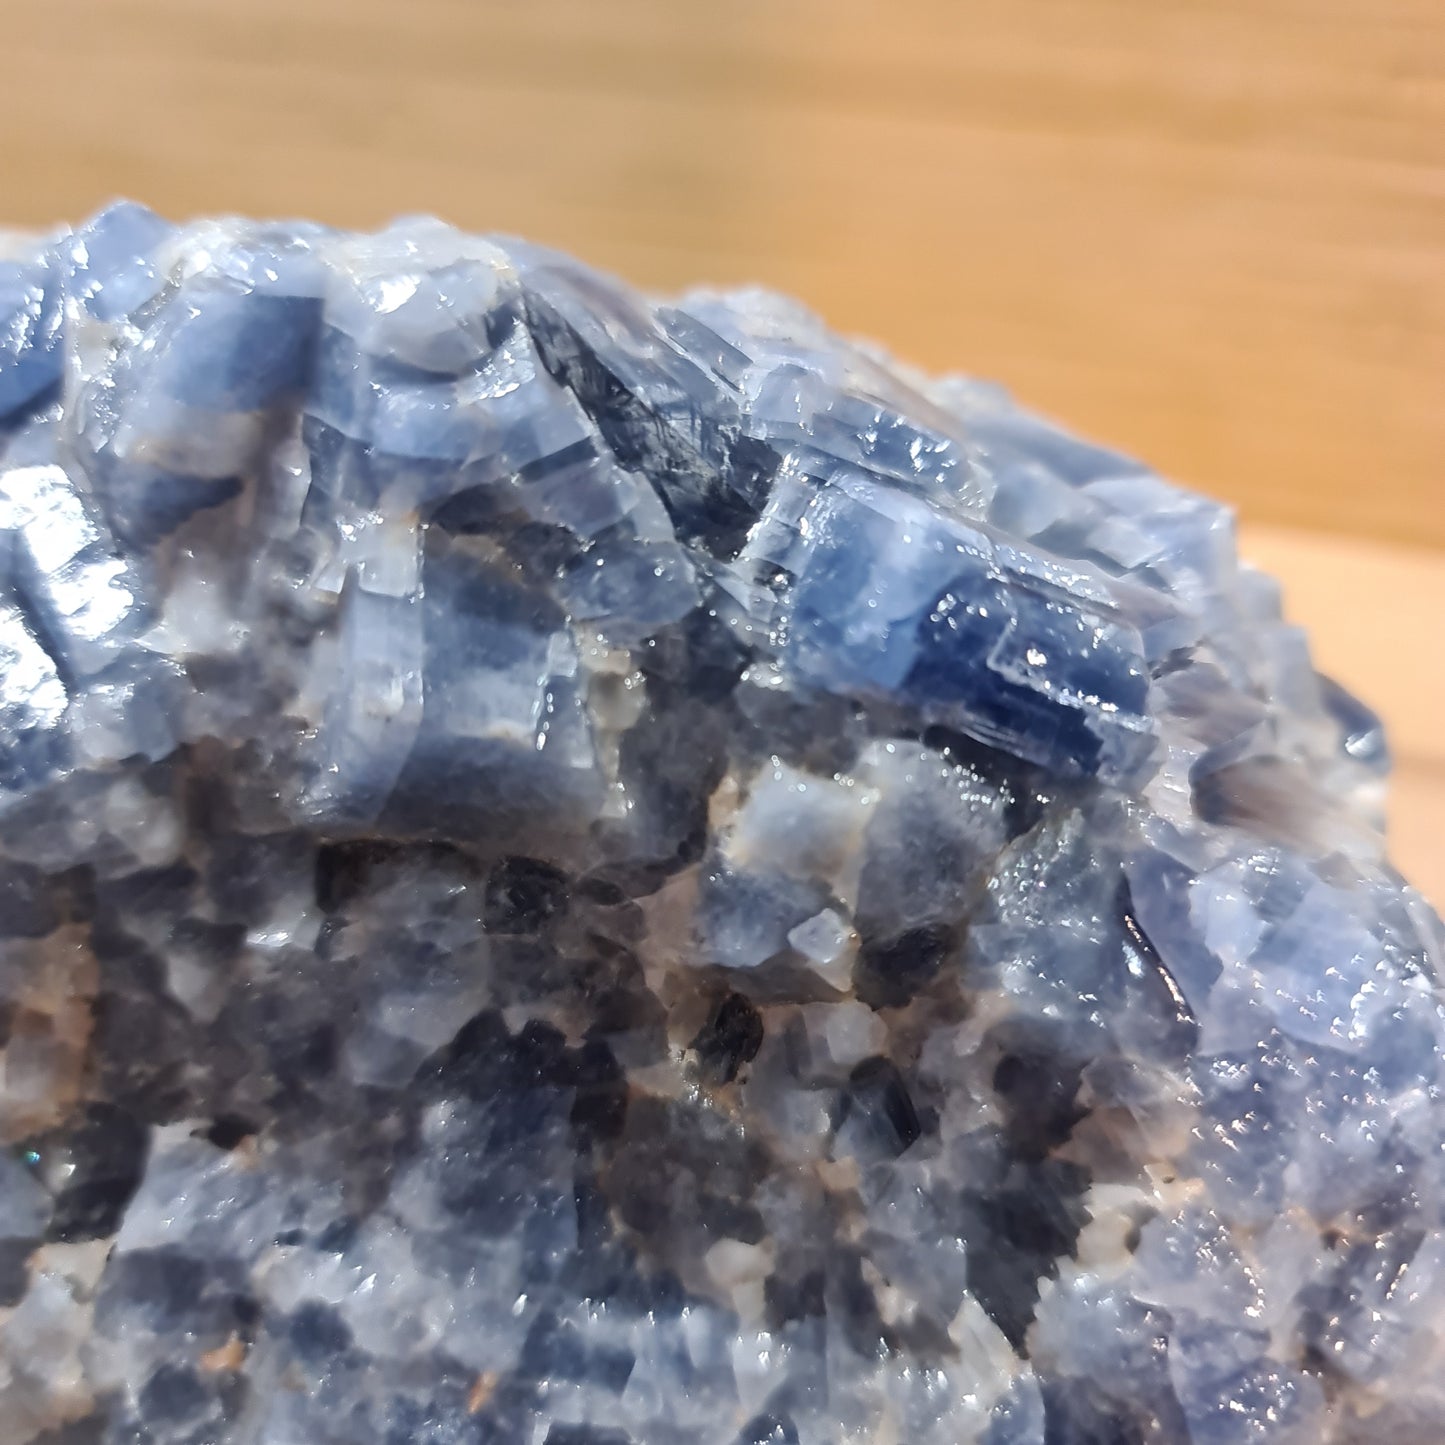 Blue Calcite - Raw Display Piece